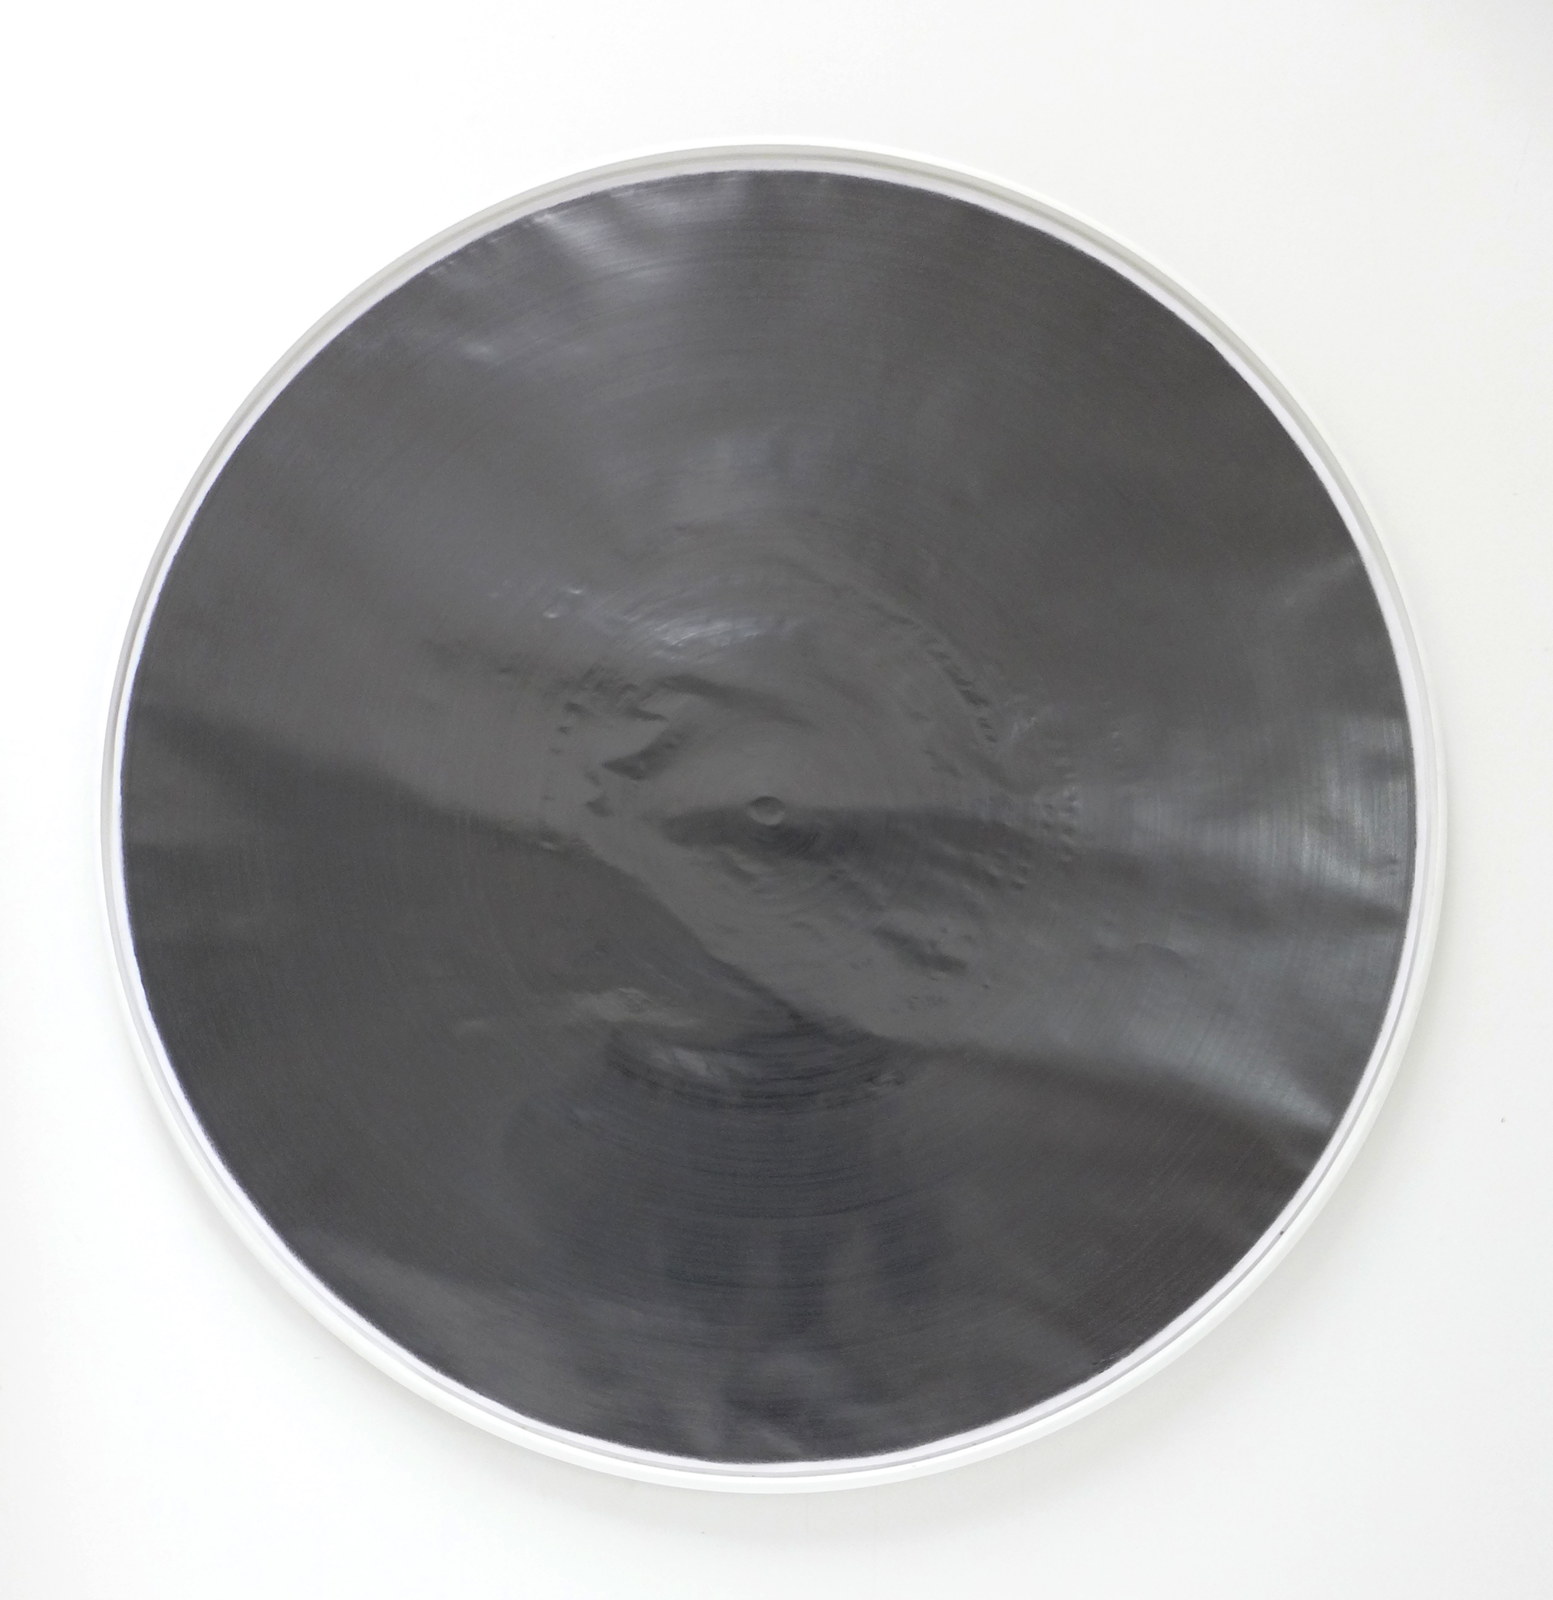 Trac tourn monochrome noir, 2013